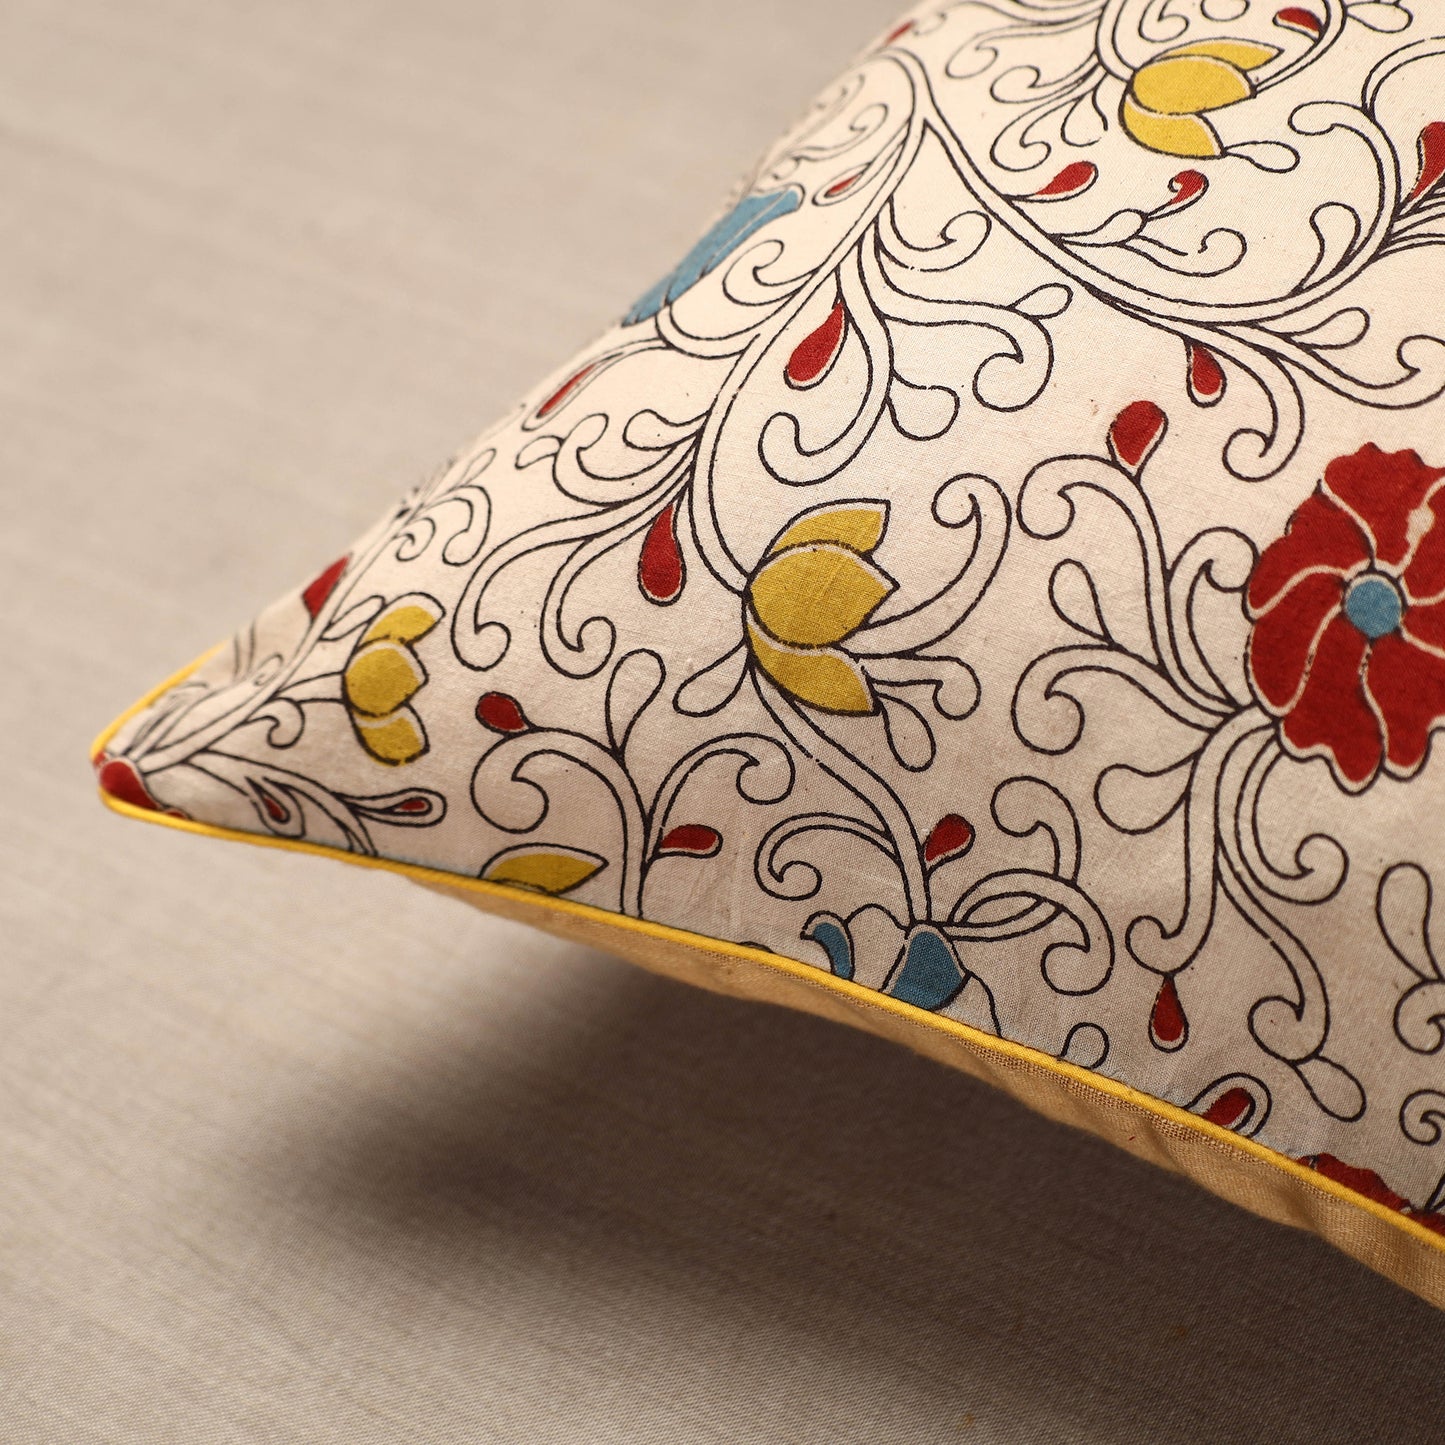 Beige - Kalamkari Printed Cotton Cushion Cover (16 x 16 in)